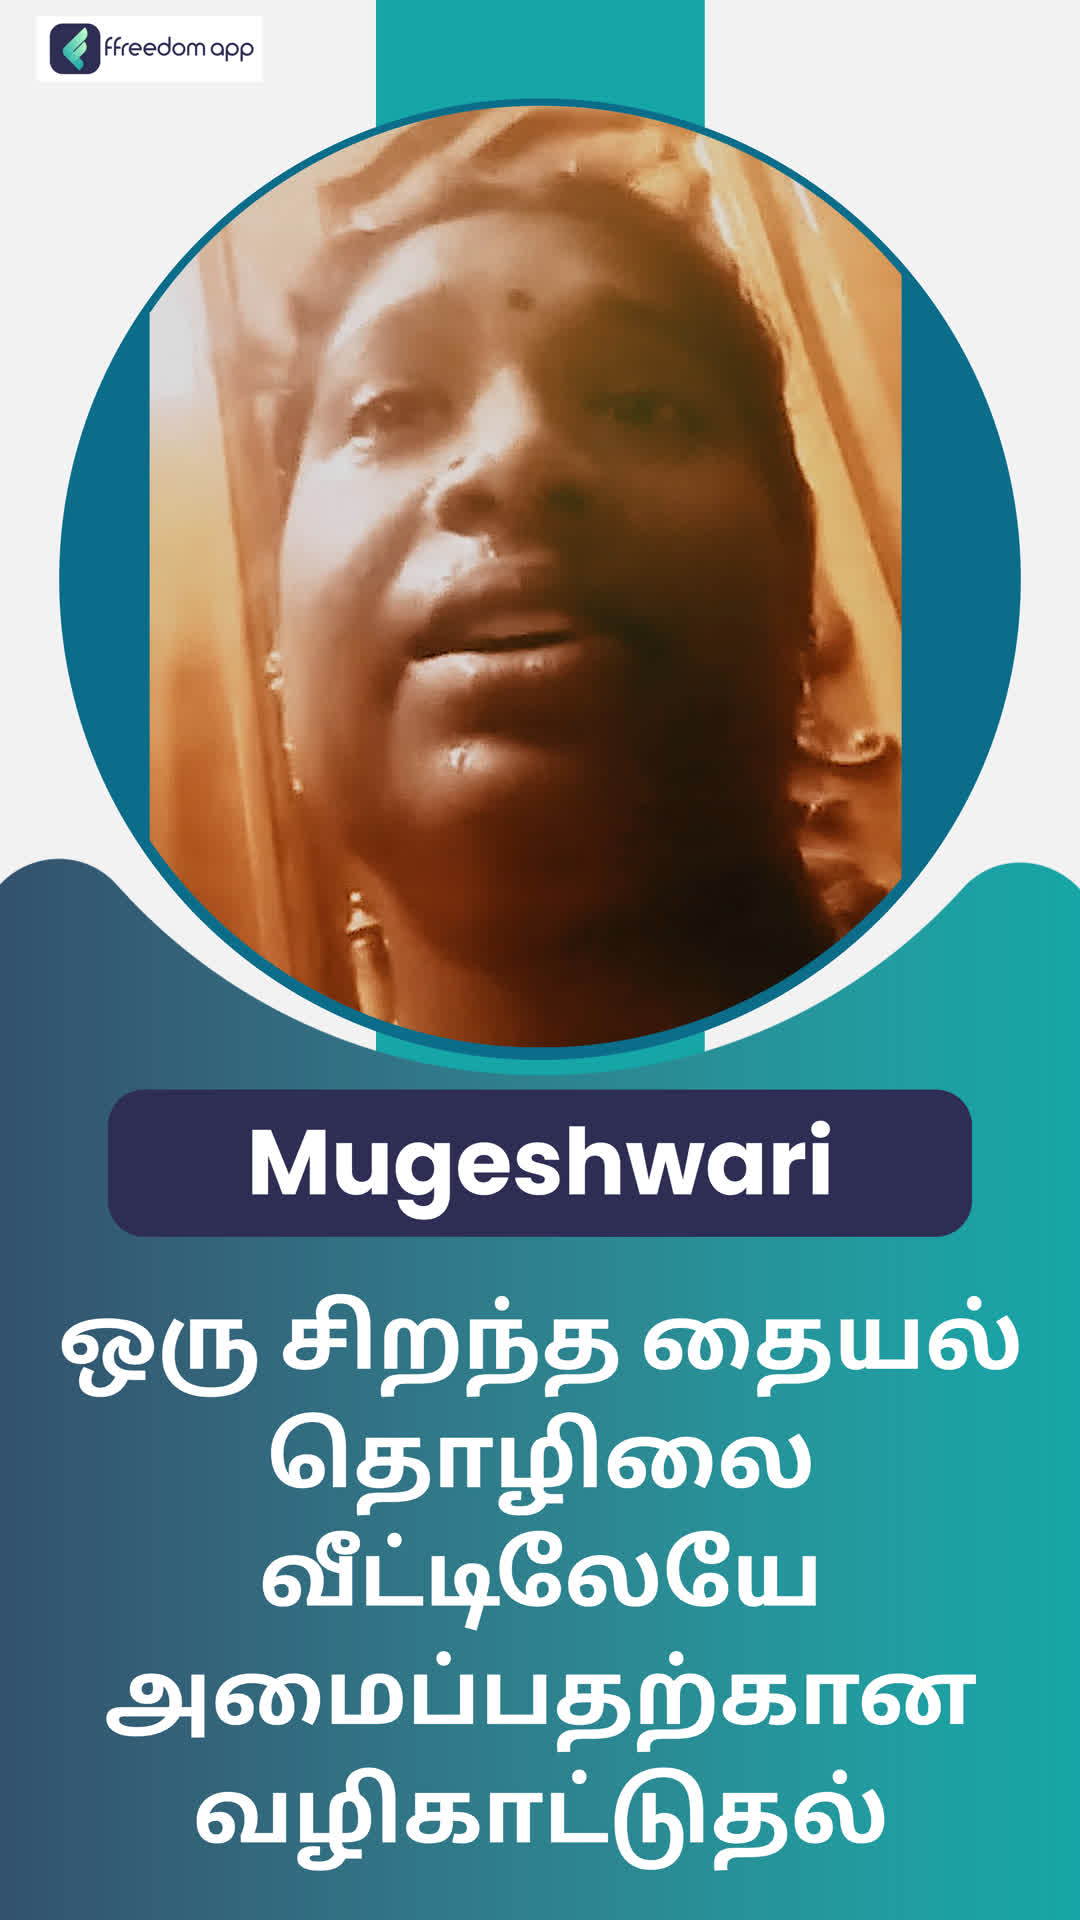 S .Mugeshwari's Honest Review of ffreedom app - Villupuram ,Tamil Nadu